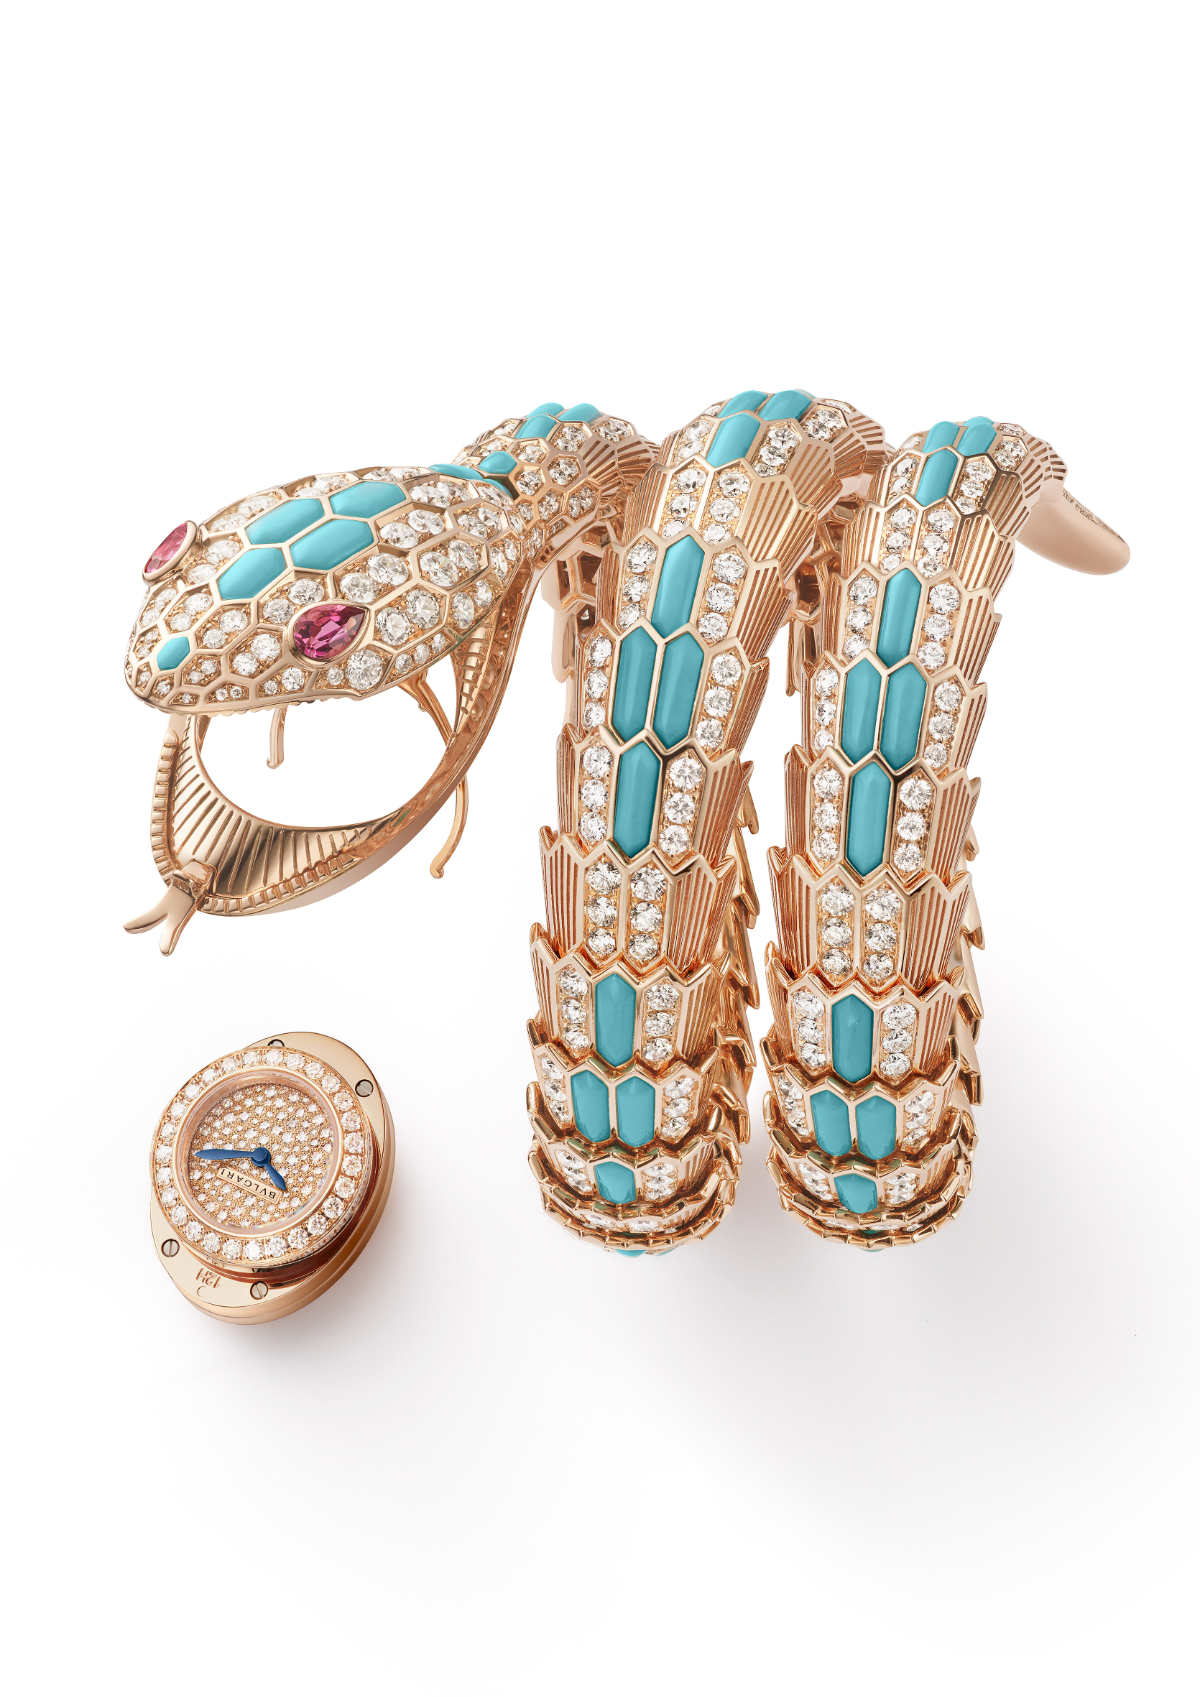 Bulgari's High Jewellery Secret Watches